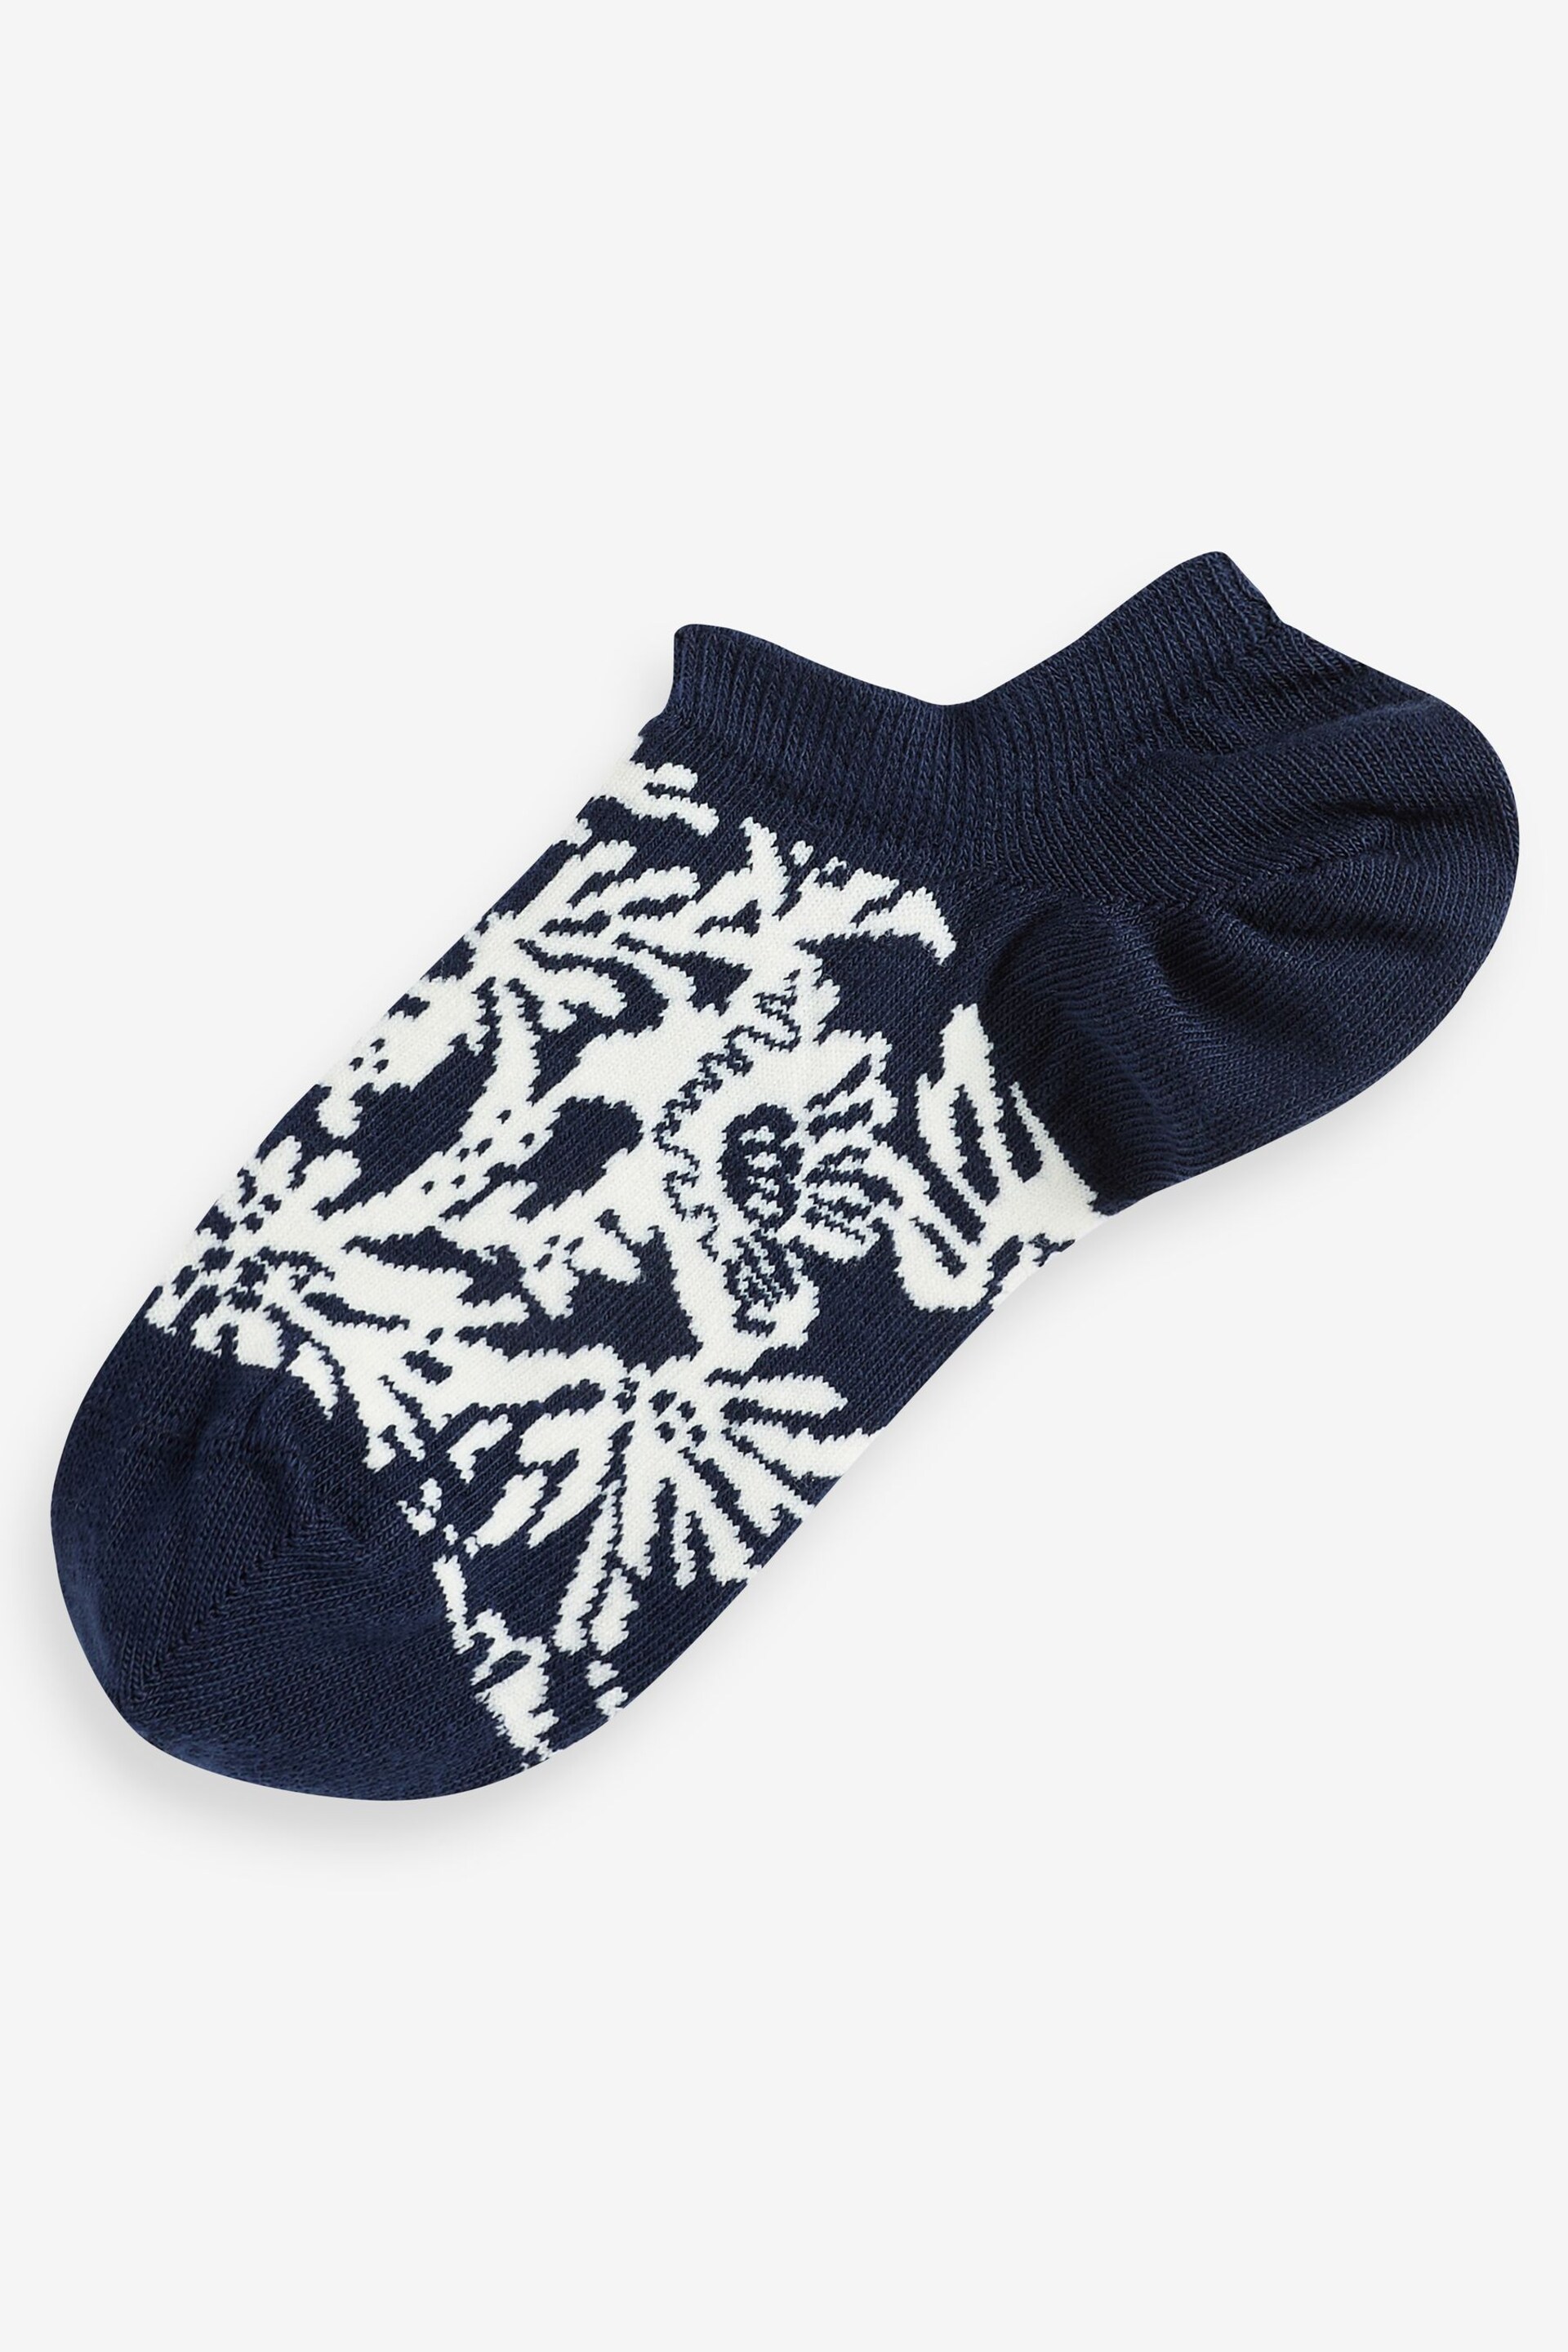 White/Blue Floral Trainer Socks 5 Pack - Image 5 of 6